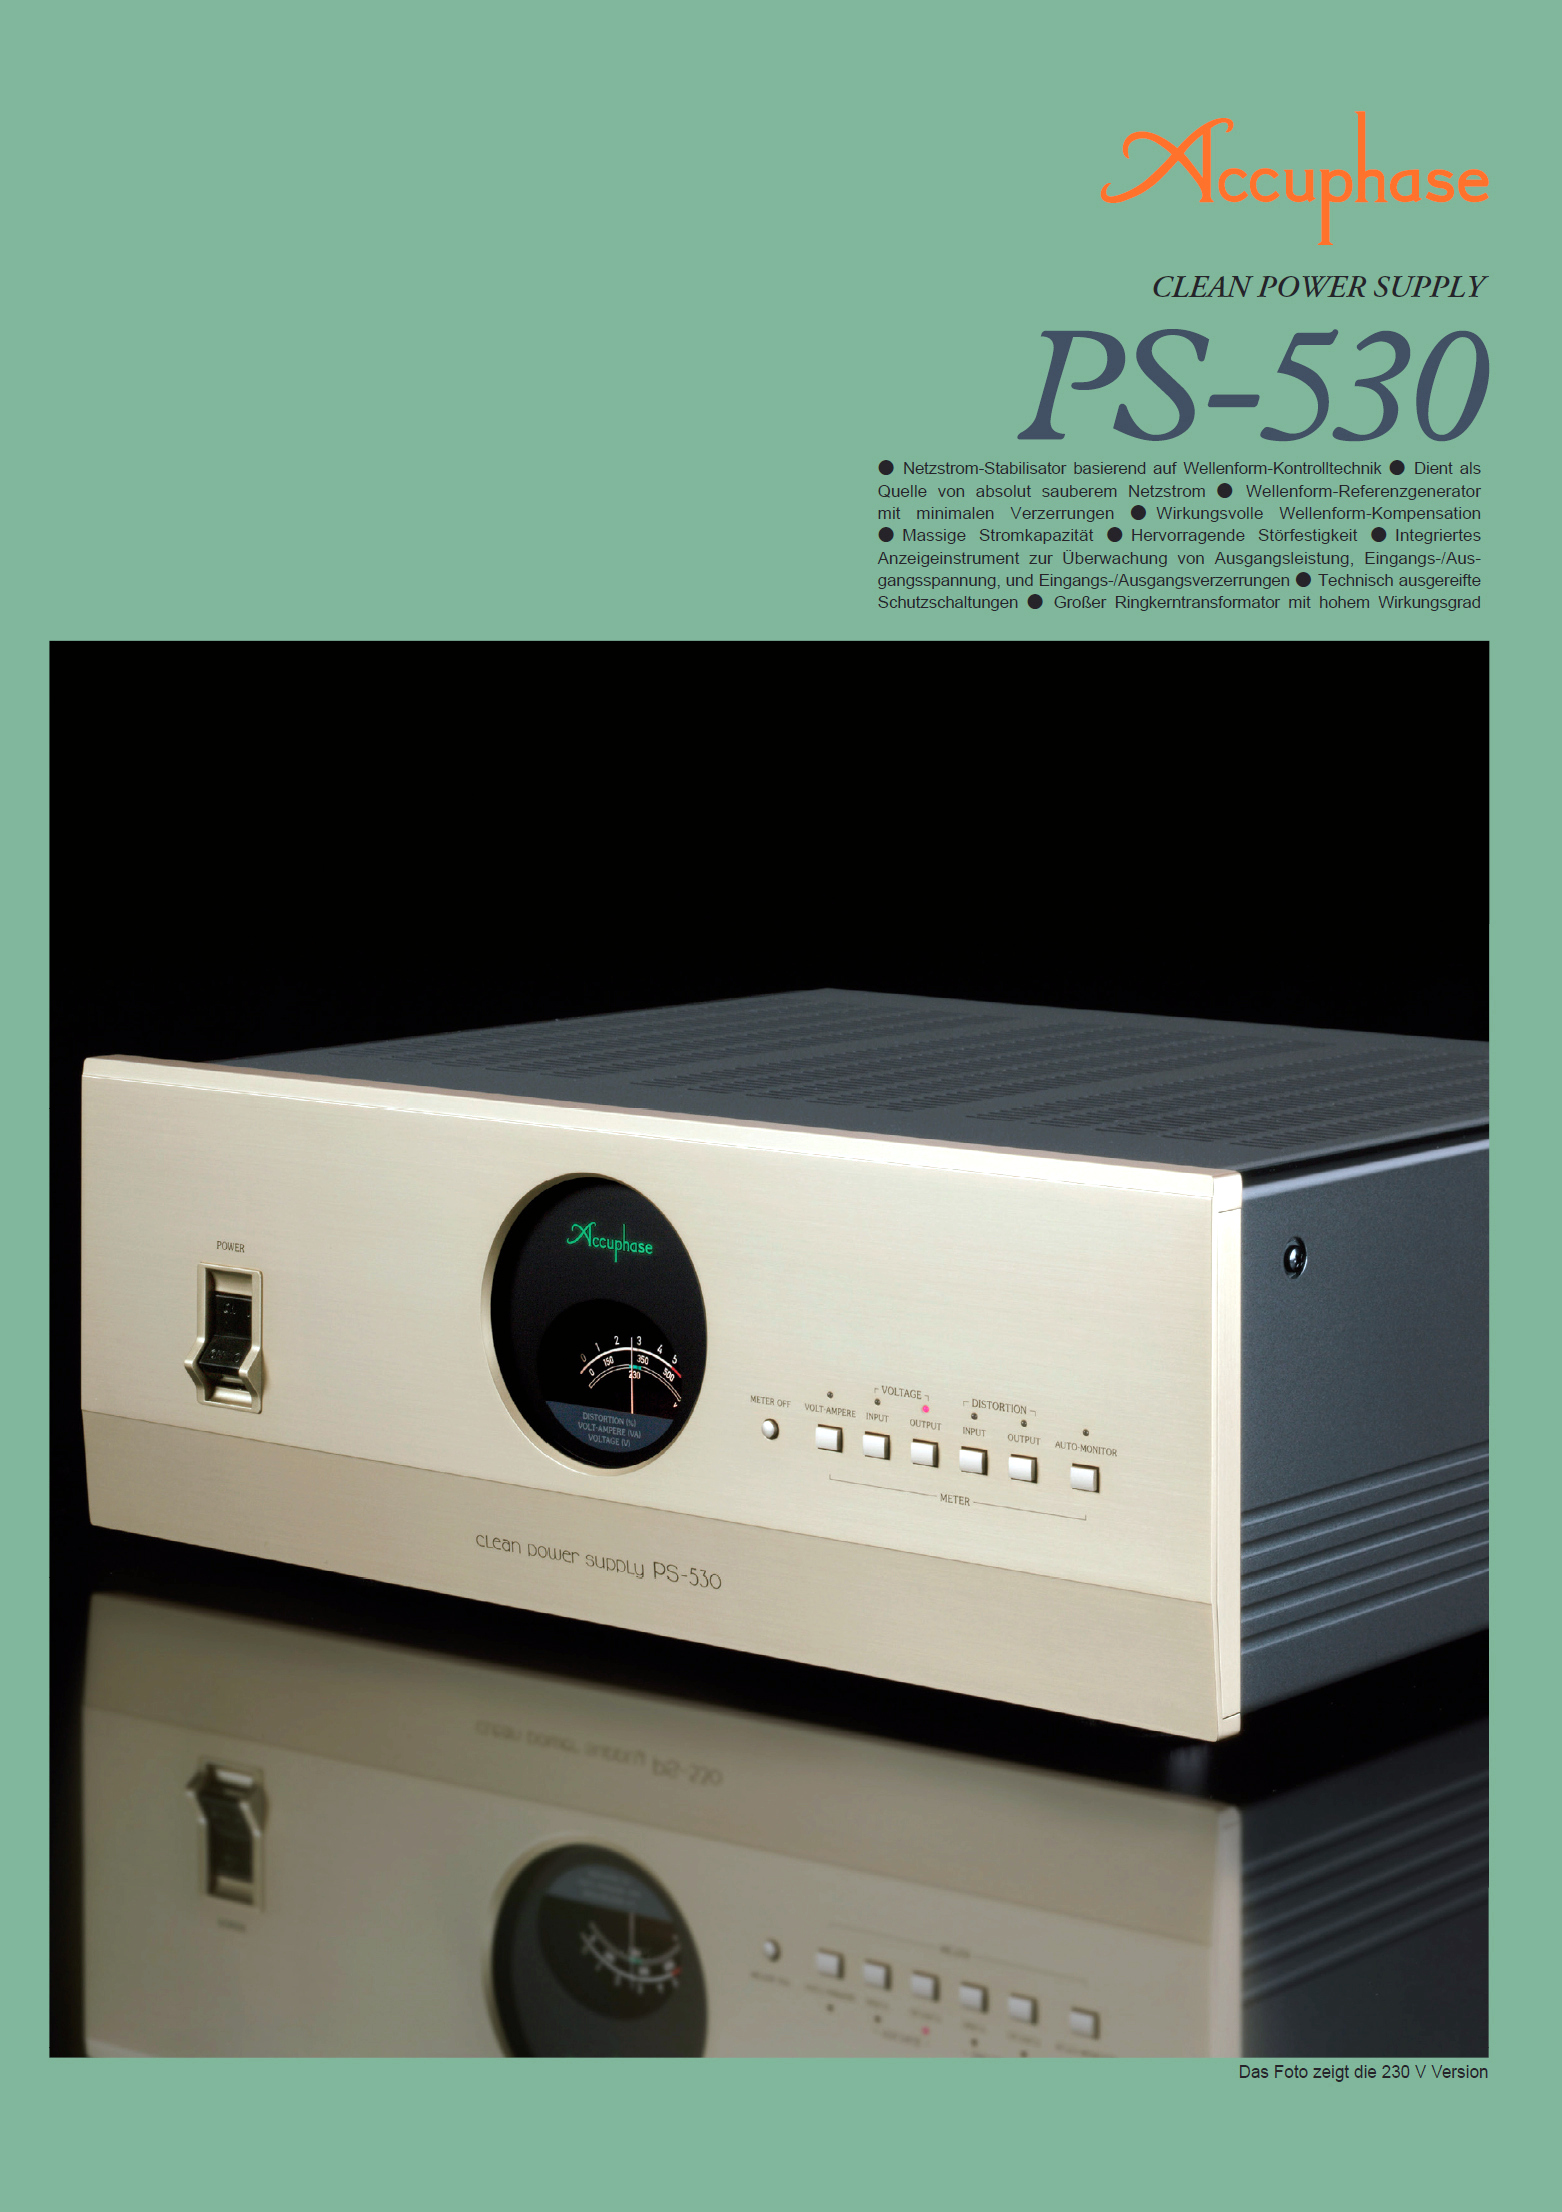 Accuphase PS-530-Prospekt-1.jpg